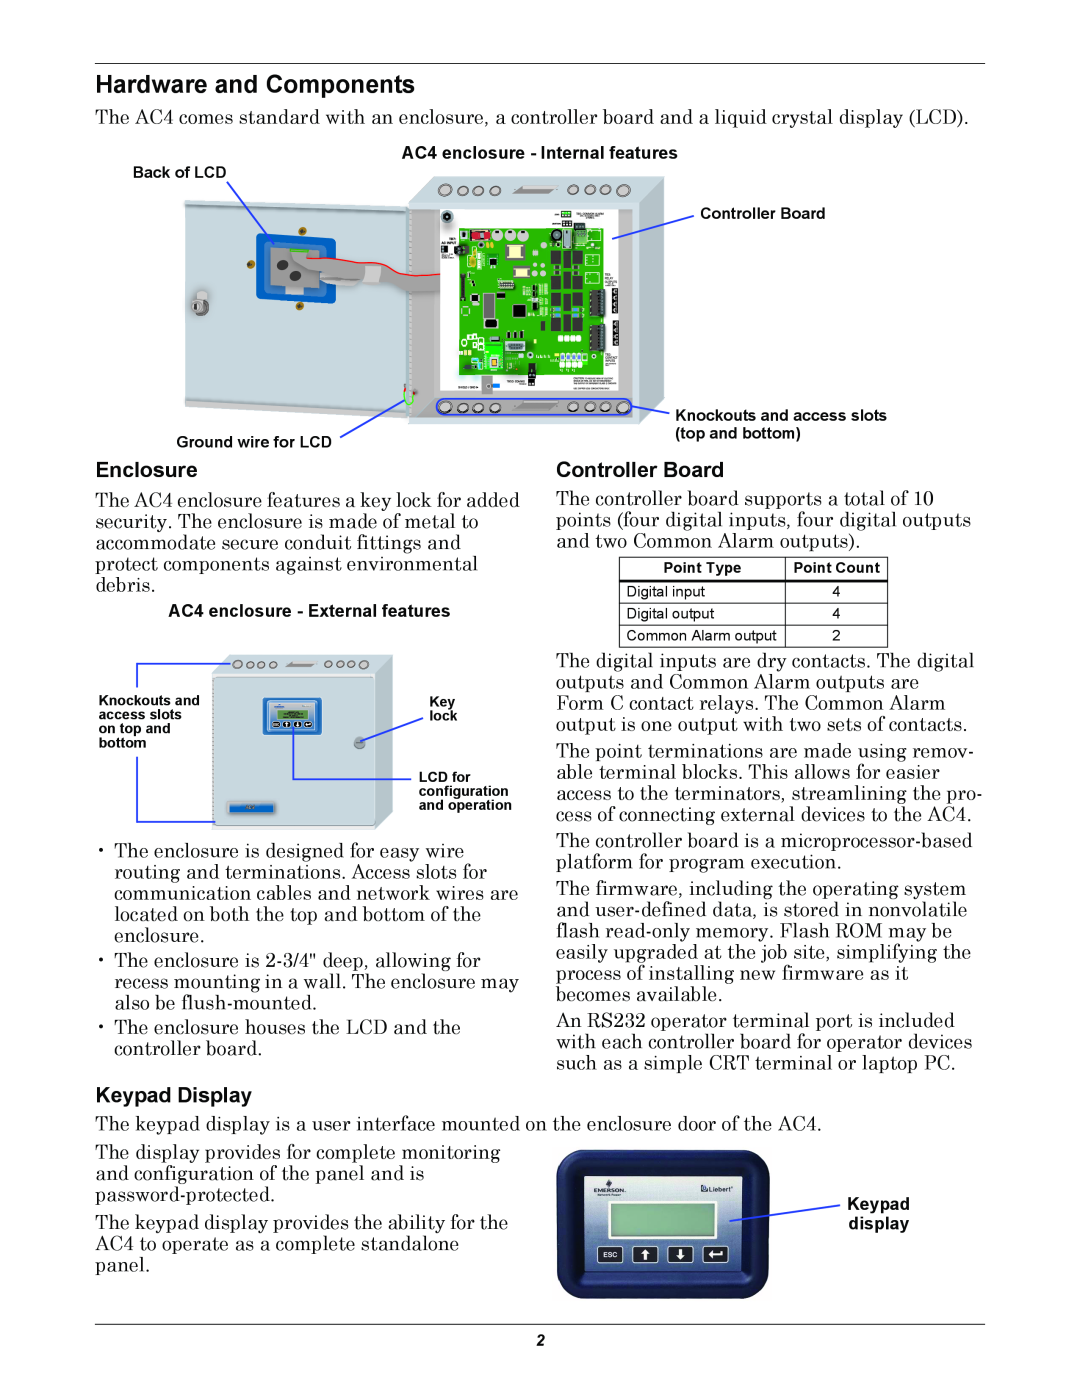 Liebert AC4 manual Hardware and Components, Enclosure, Controller Board, Keypad Display 